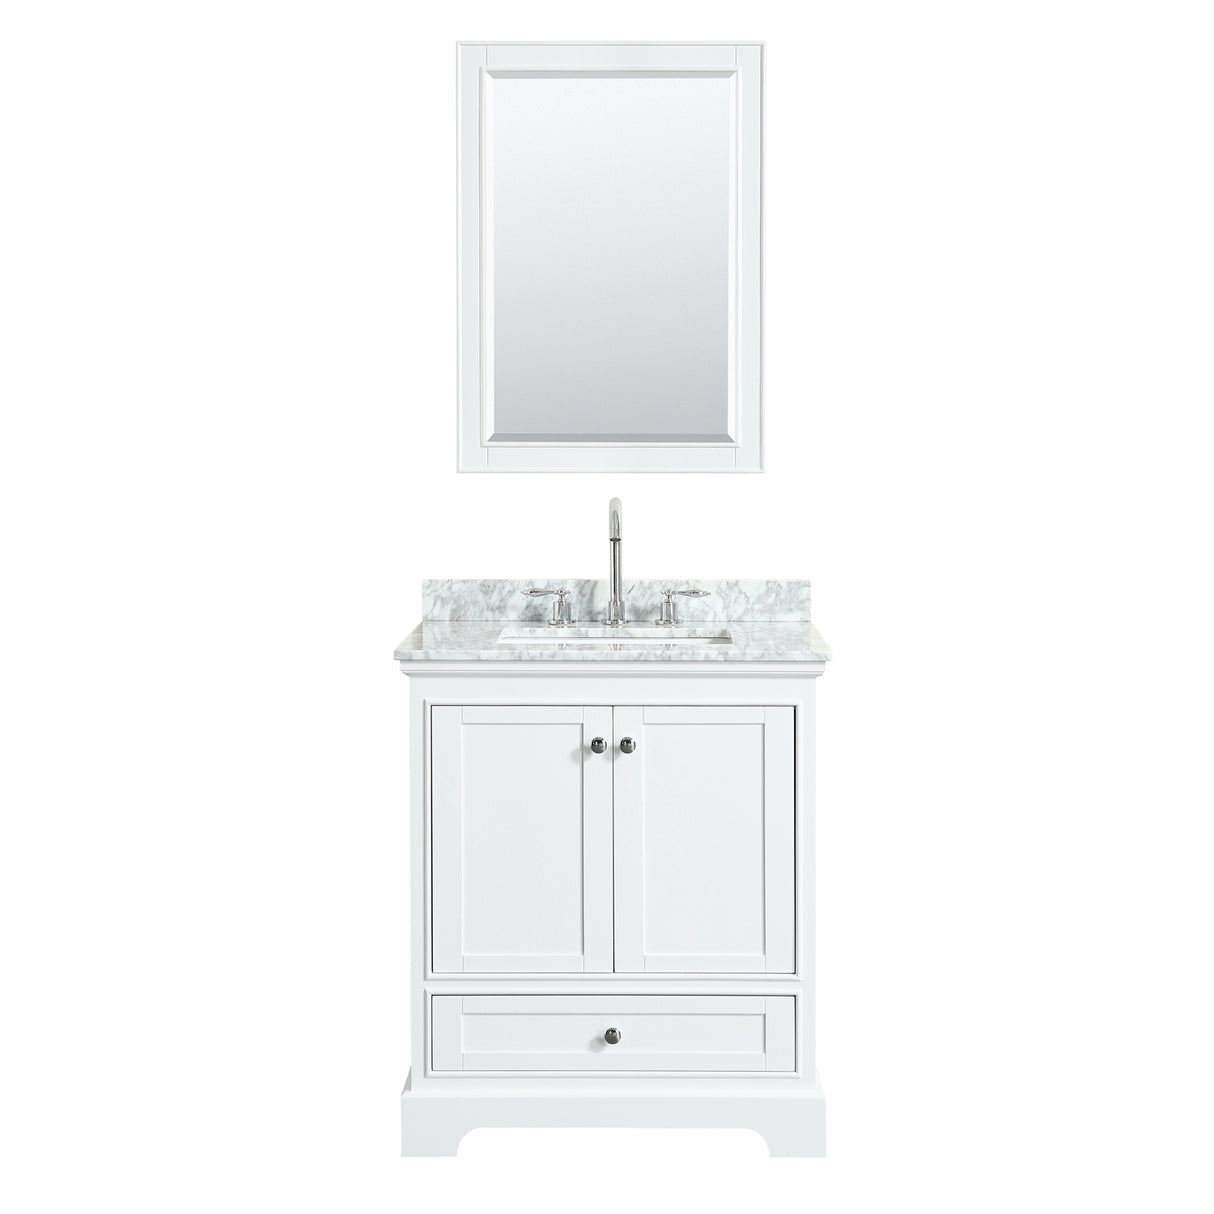 Deborah 30 Inch Single Bathroom Vanity in White White Carrara Marble Countertop Undermount Square Sink and 24 Inch Mirror